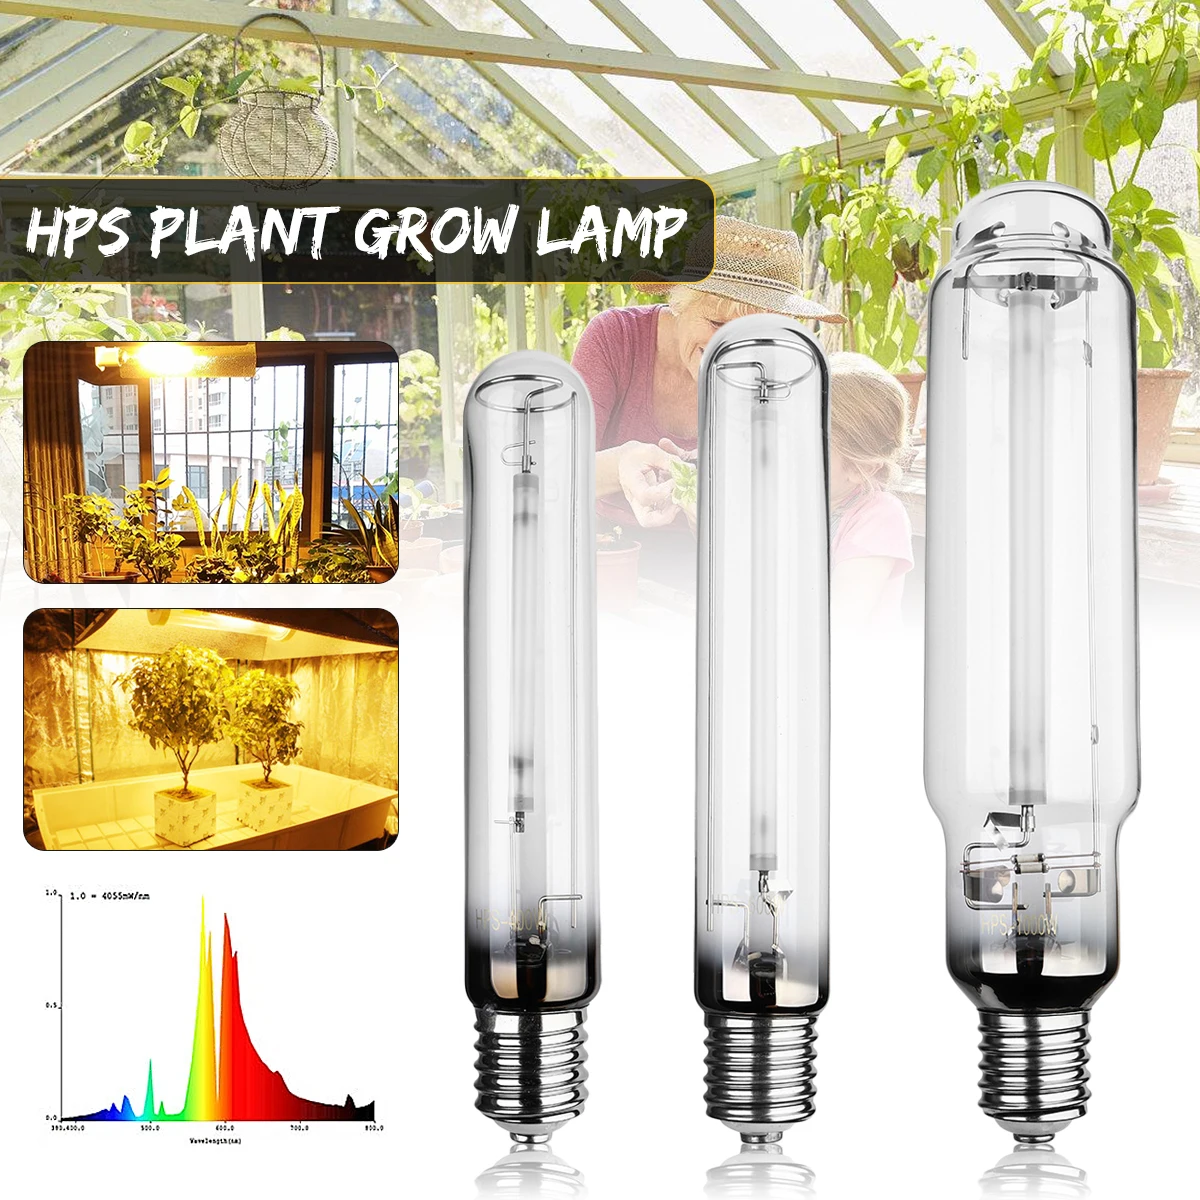 

HPS Plant Grow Lamp 400W 600W 1000W E40 23Ra High Pressure Sodium Lamp Energy Efficient Long Service Life 23000 Hours